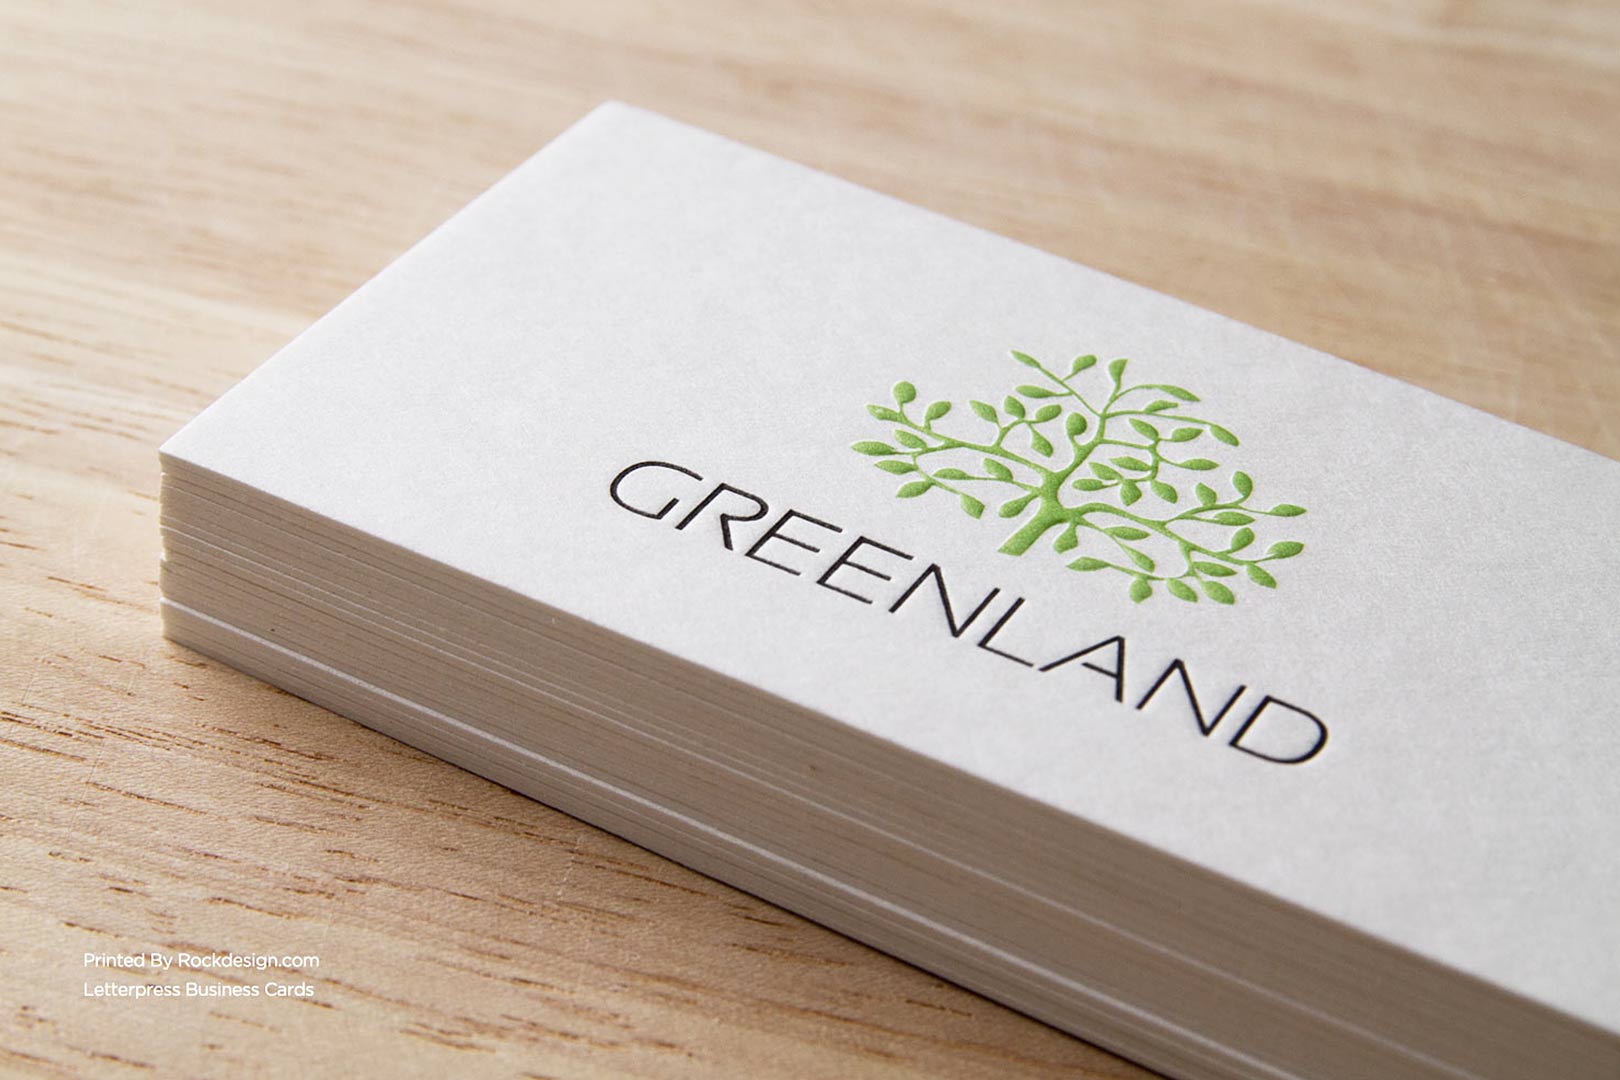 letterpress printed card Eco friendly Hello beautiful